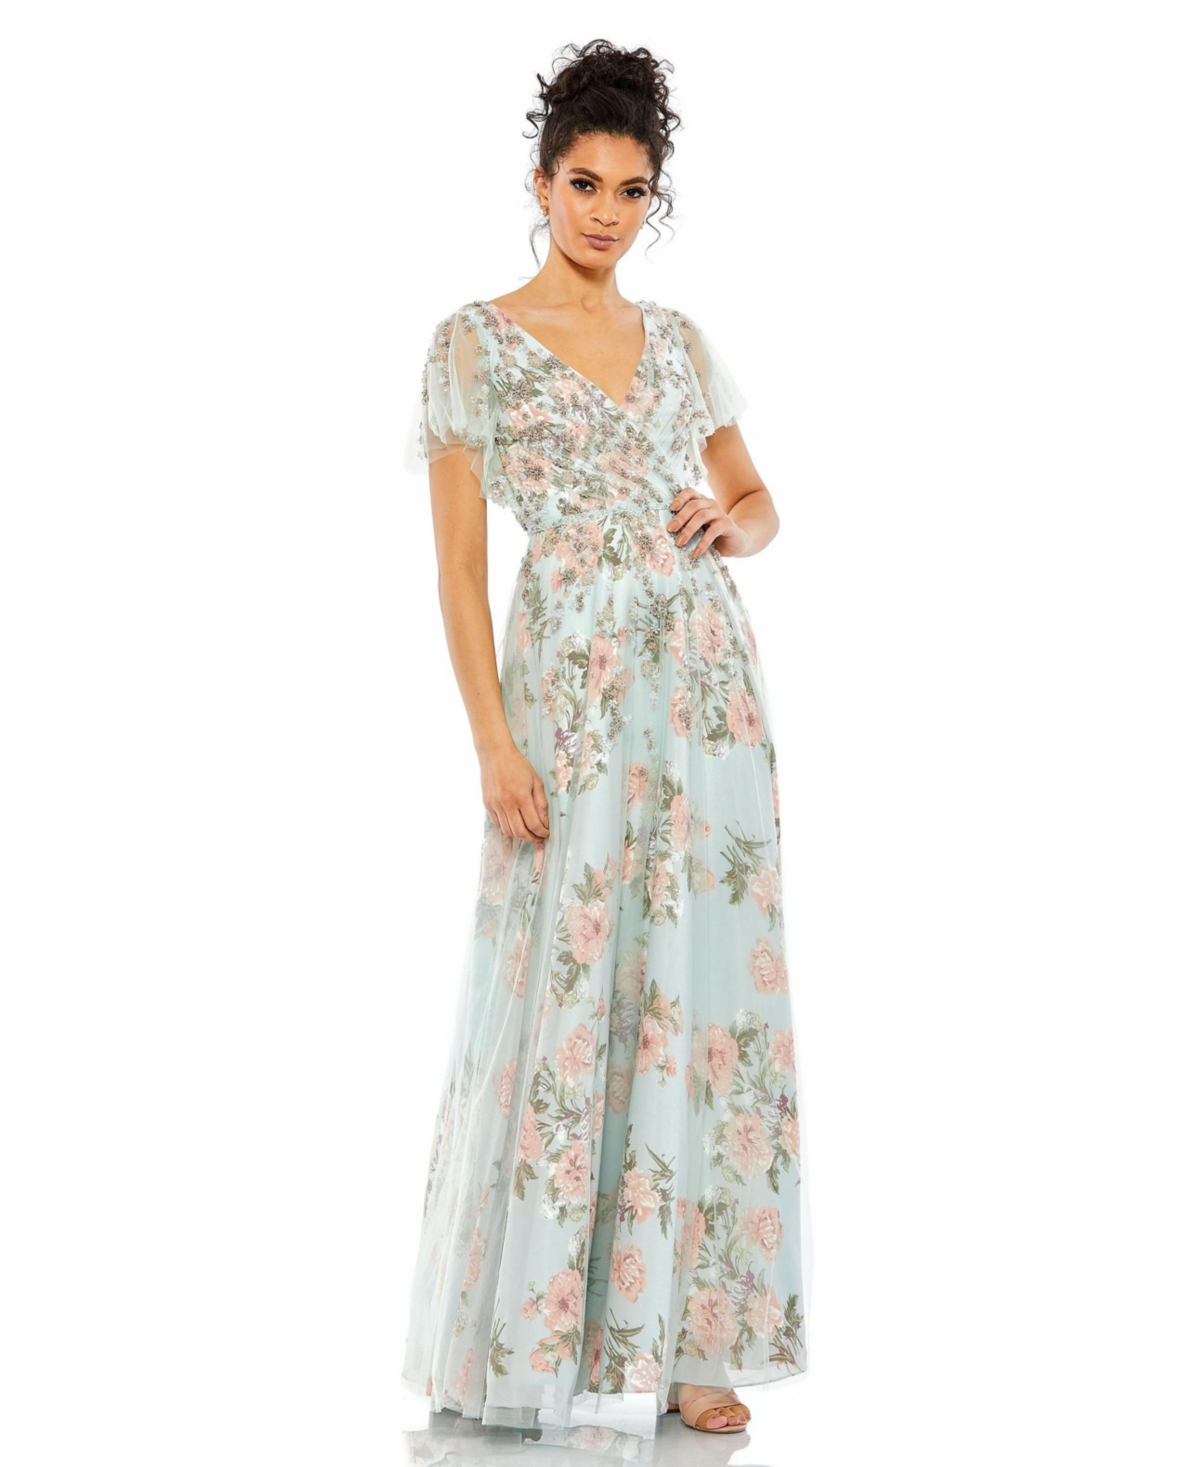 1920s Style Dresses, 1920s Dress Fashions You Will Love Womens Floral Flutter Sleeve V-Neck Maxi Dress - Blue multi $458.00 AT vintagedancer.com